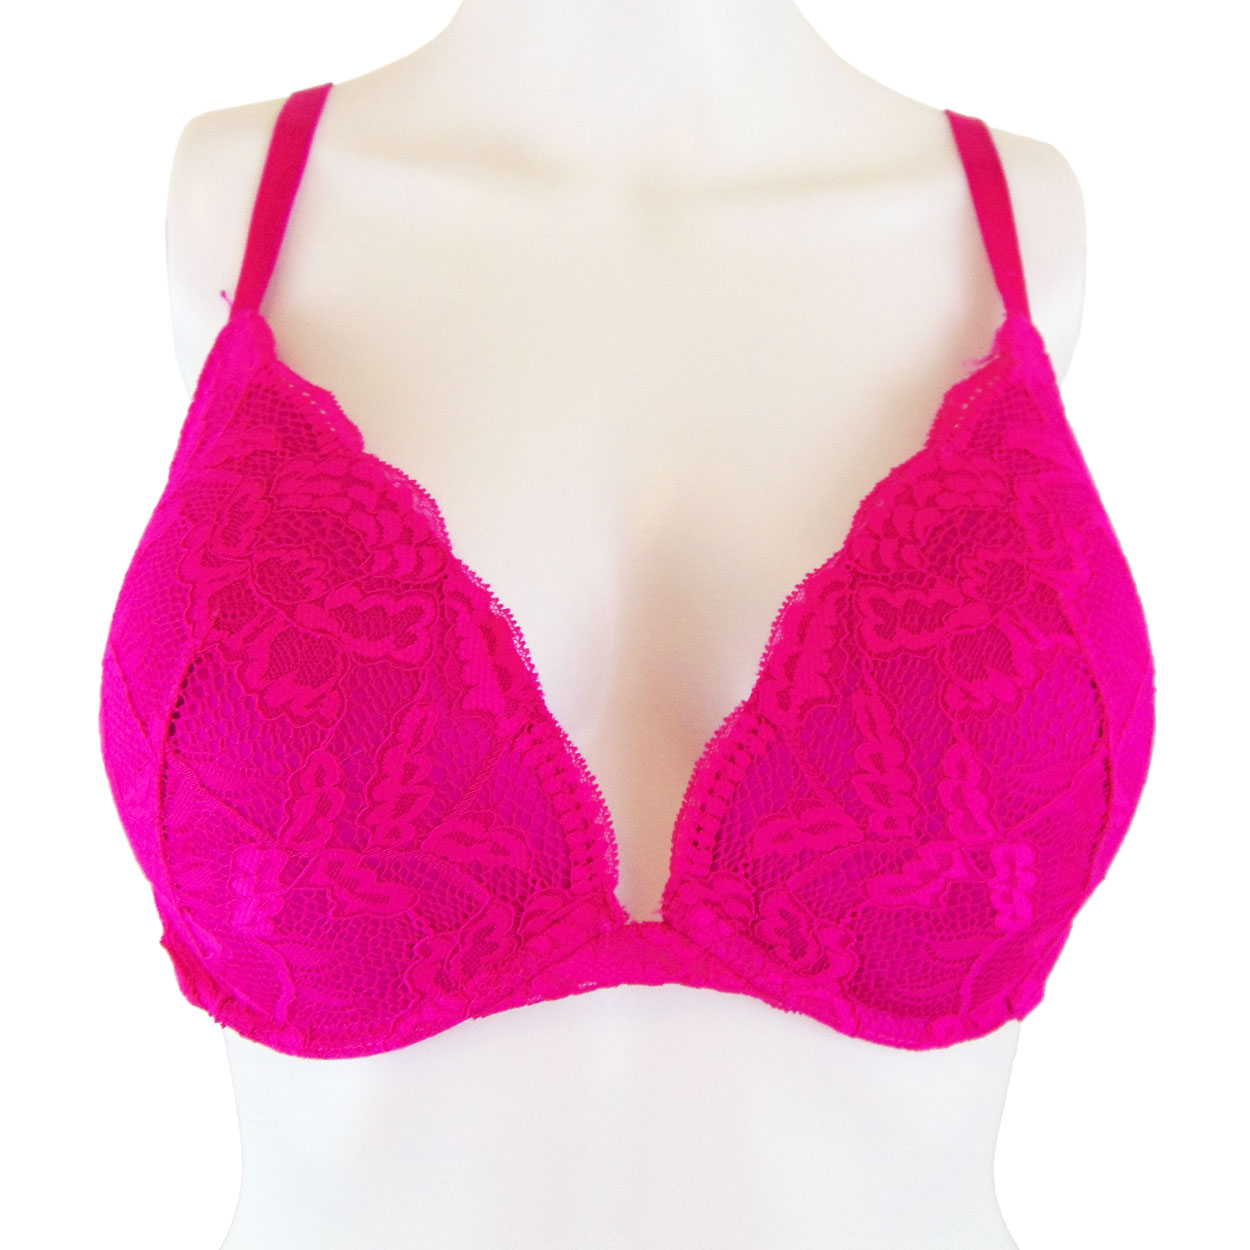 La Senza Remix Pink Underwired Bra Size 34C 10A-601 - $7 - From Bal